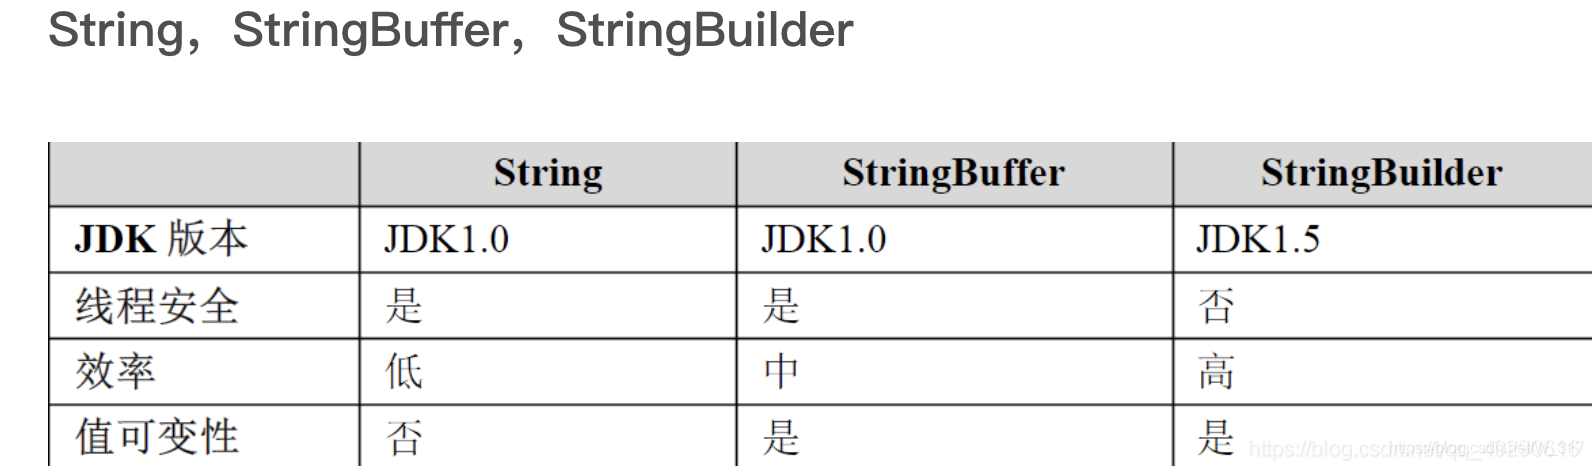 为什么需要StringBuffer